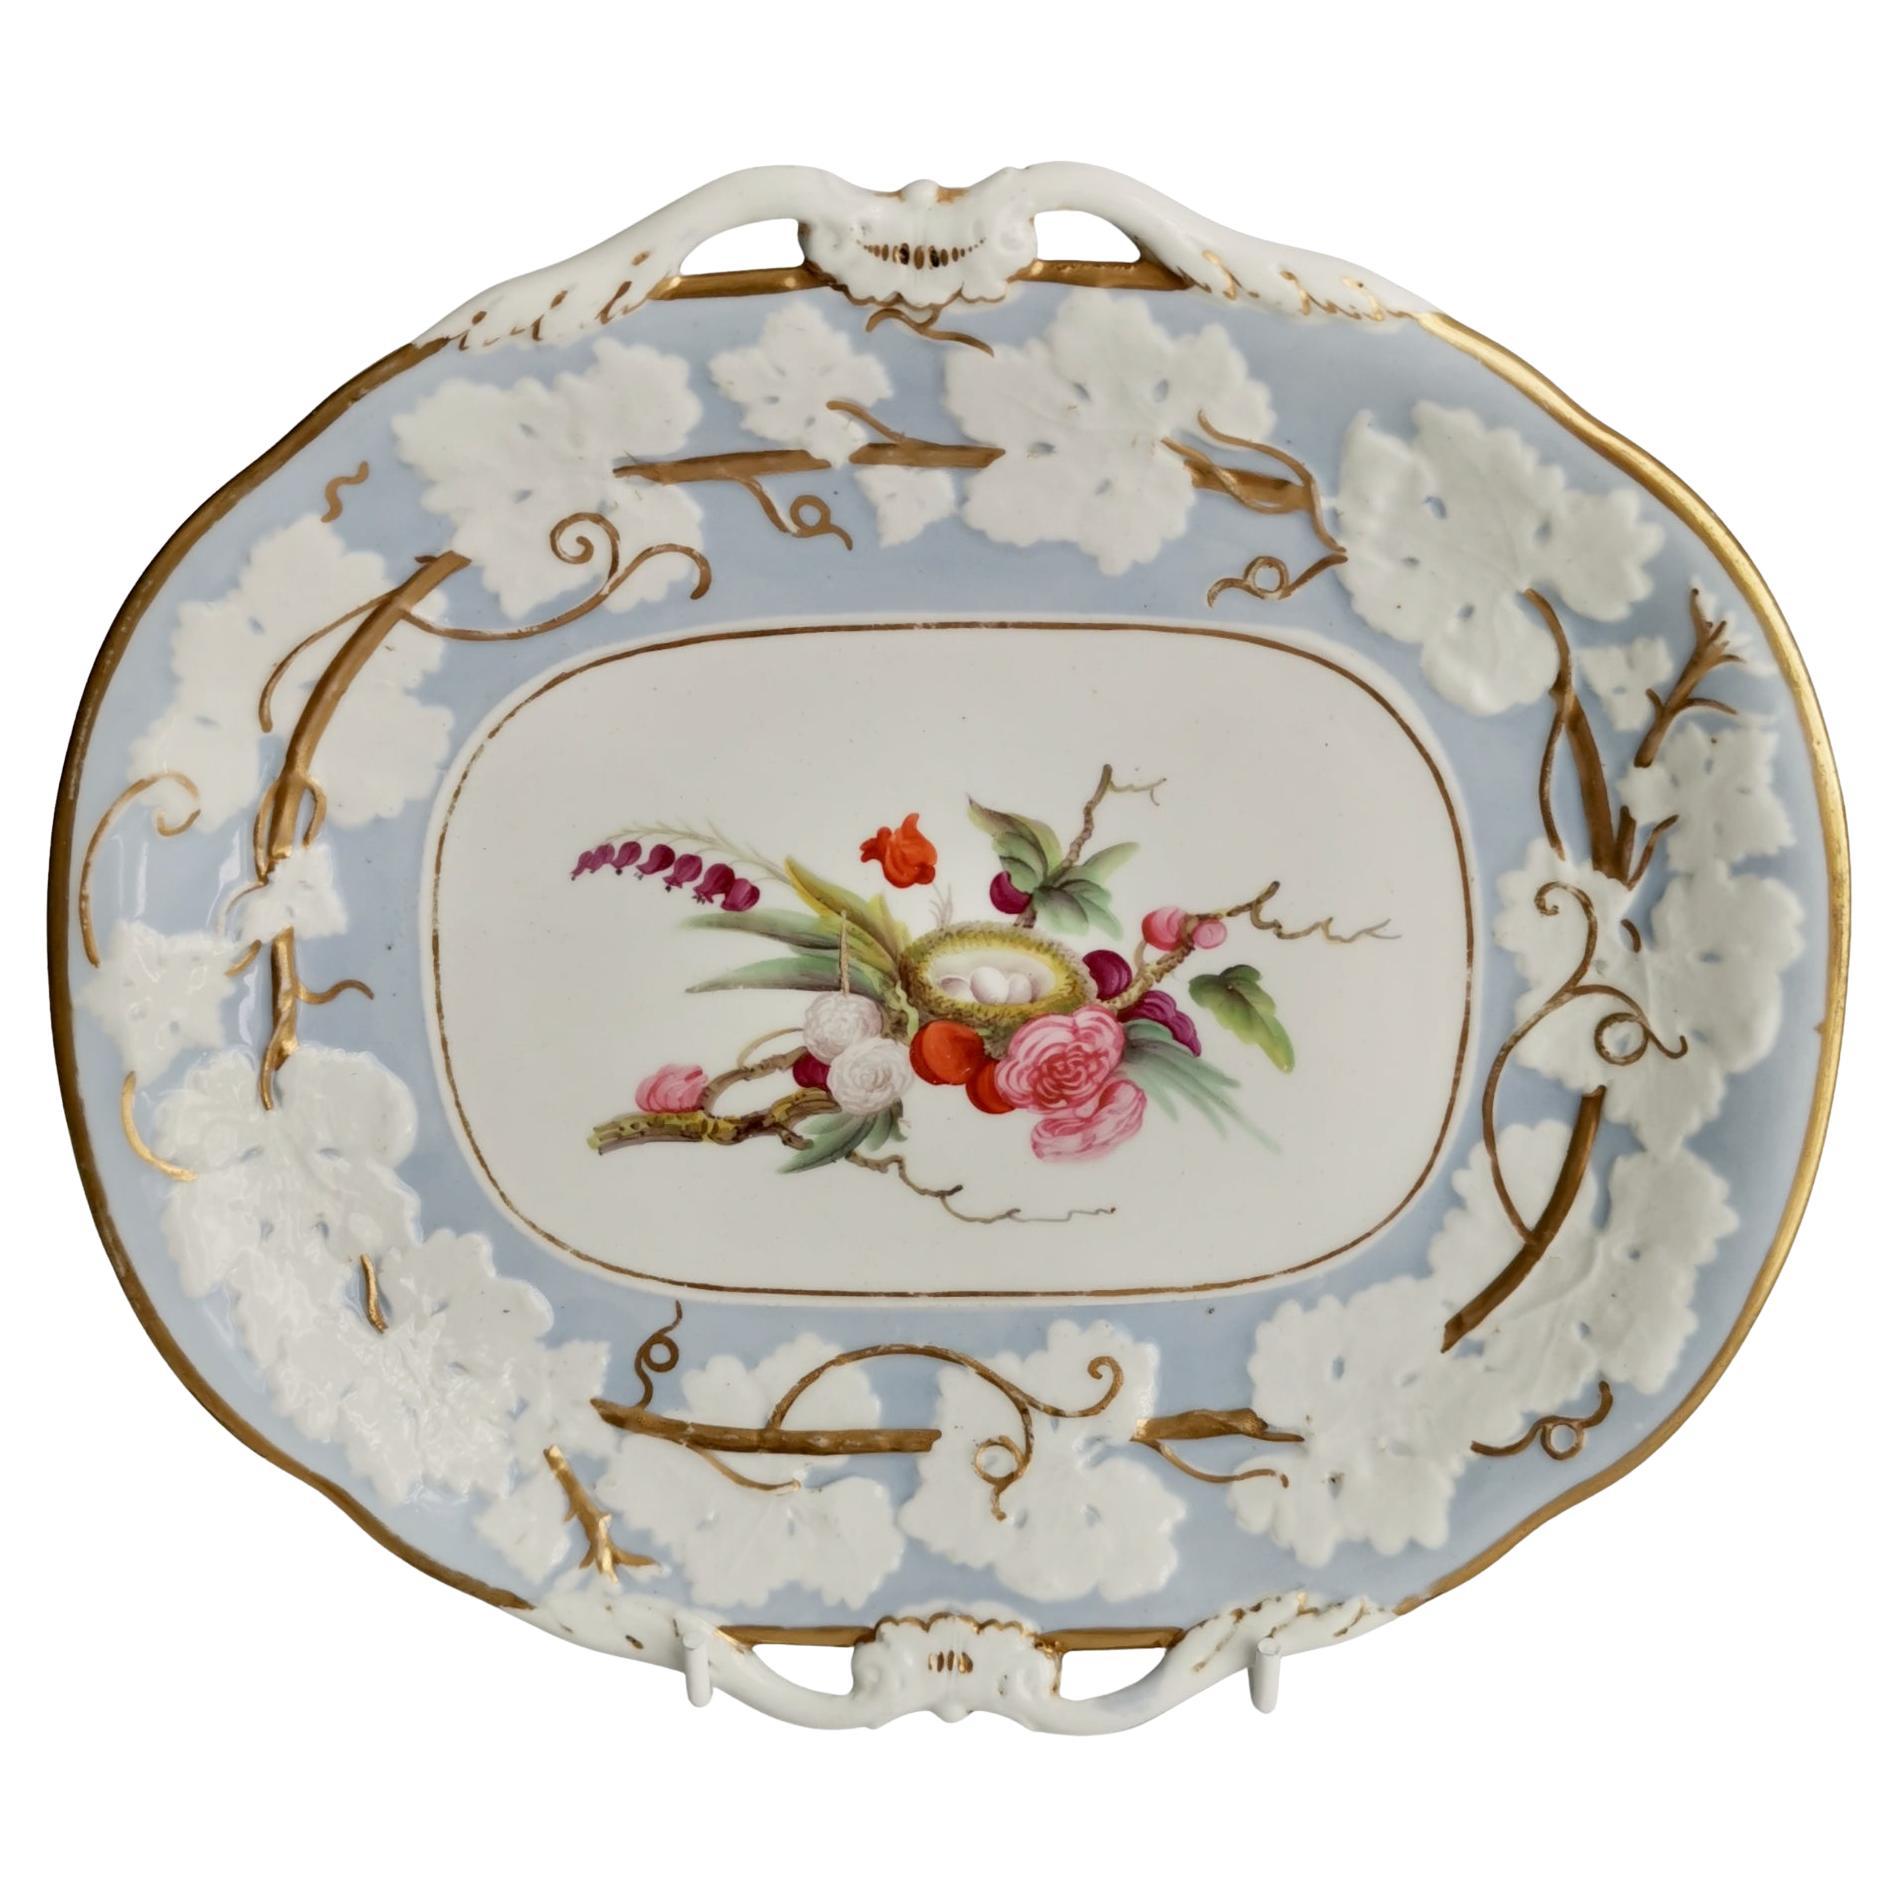 Mason's Porcelain Serving Dish, Light Blue with Birds Nest, Regency, ca 1813